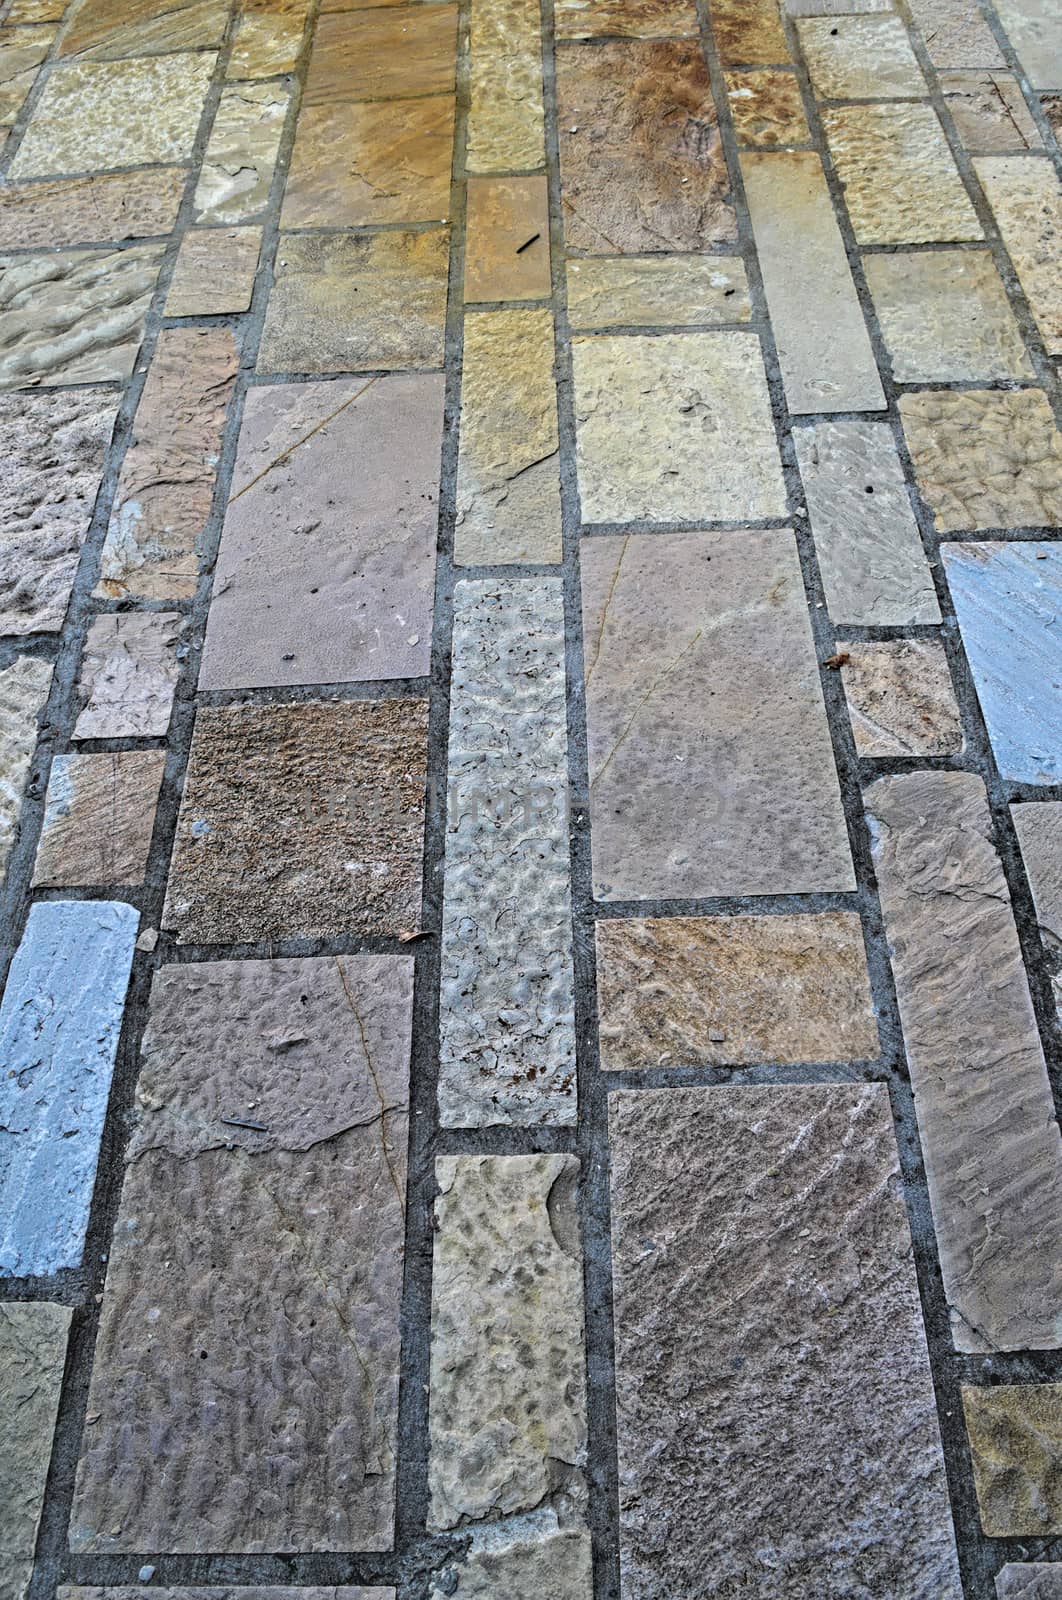 Decorated bricks tiles sidewalk, close up by sheriffkule